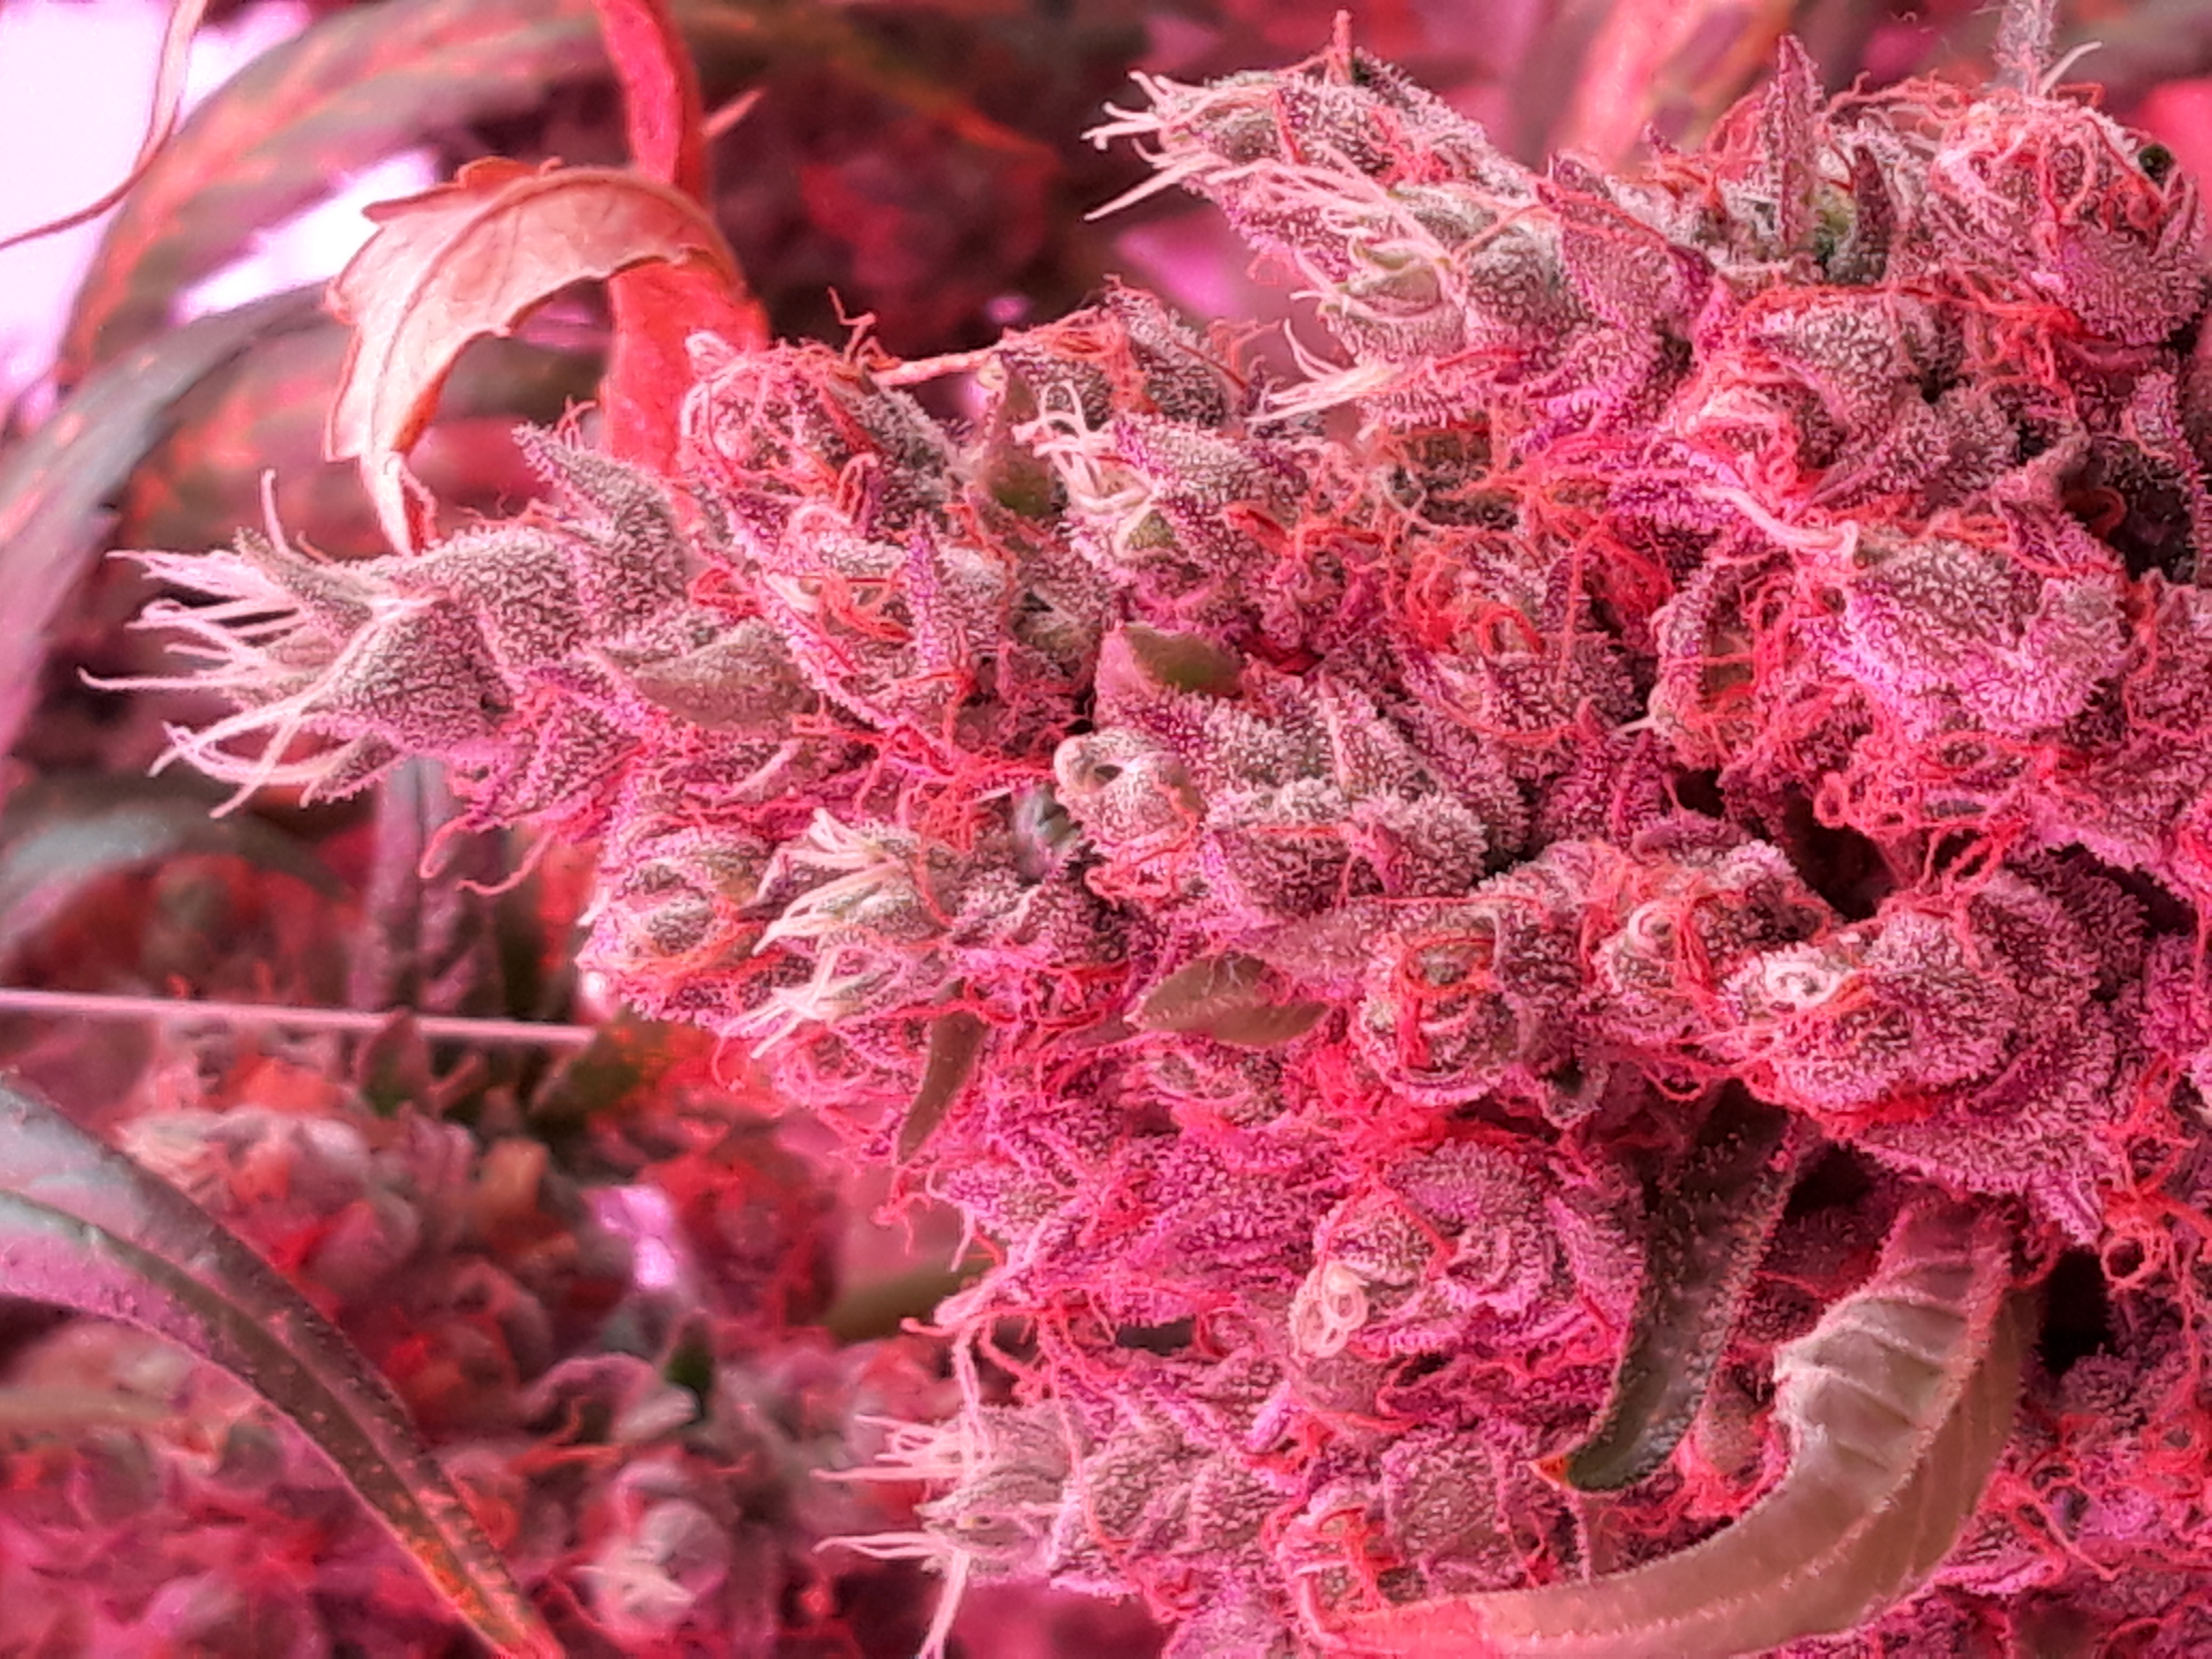 Almost fully grown cannabis flower (Source: Wageningen U&R)